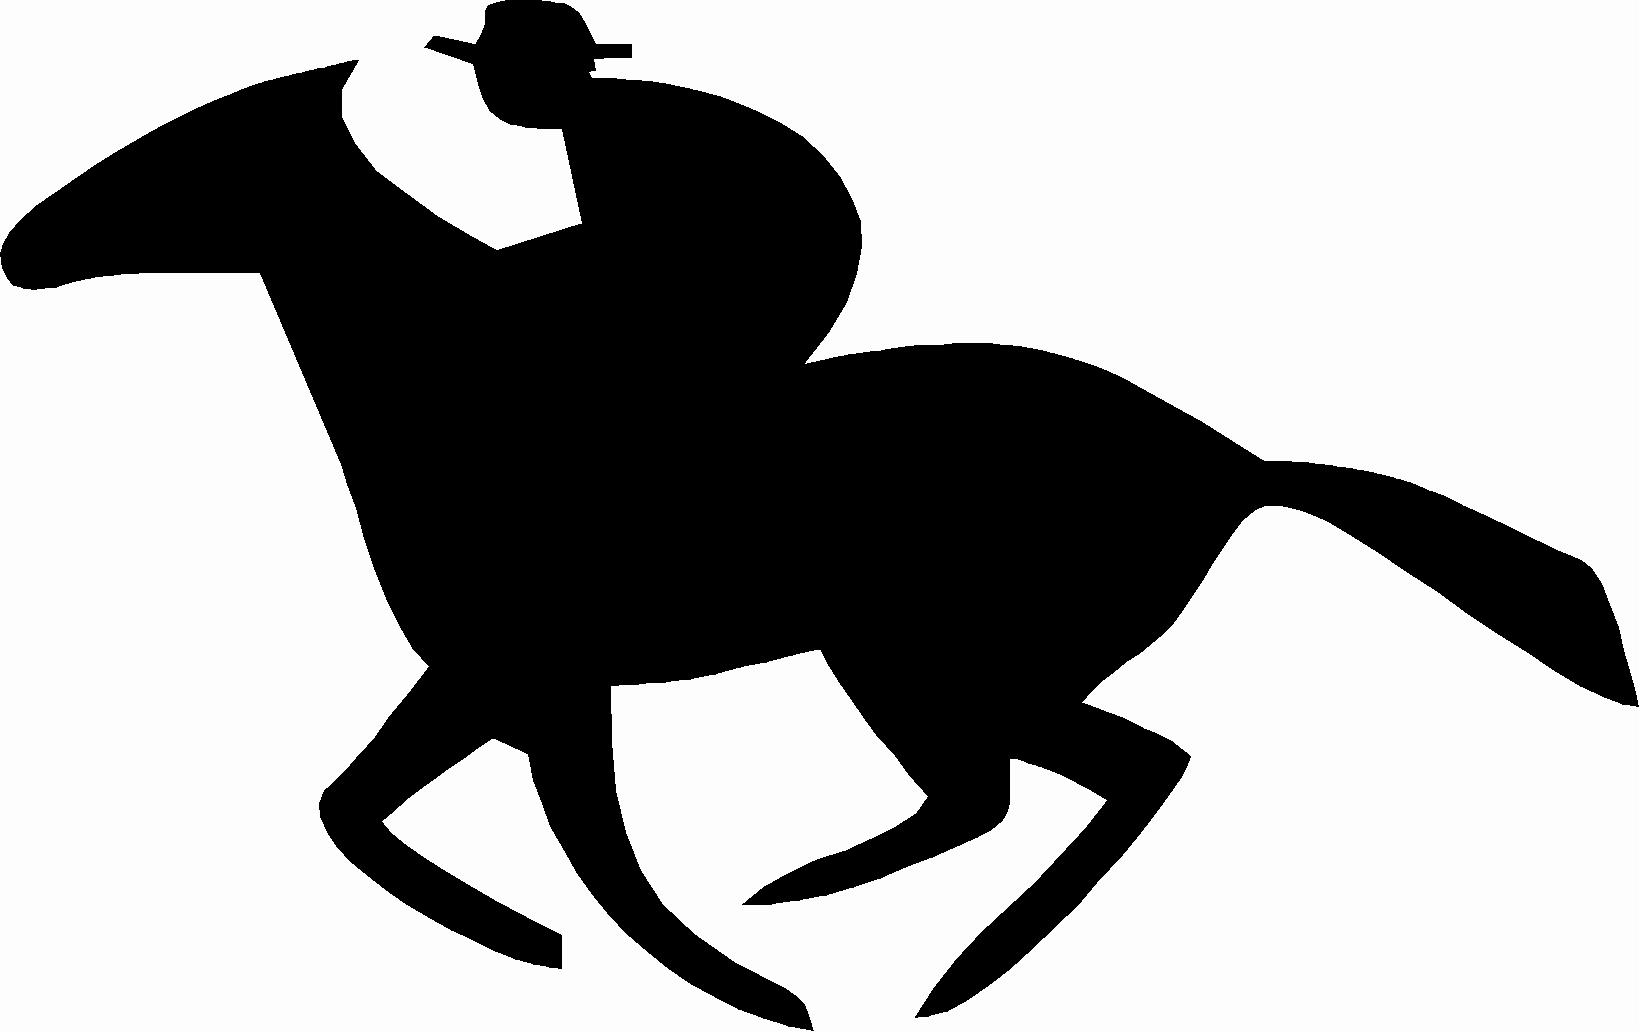 Horse Racing Clip Art - Image